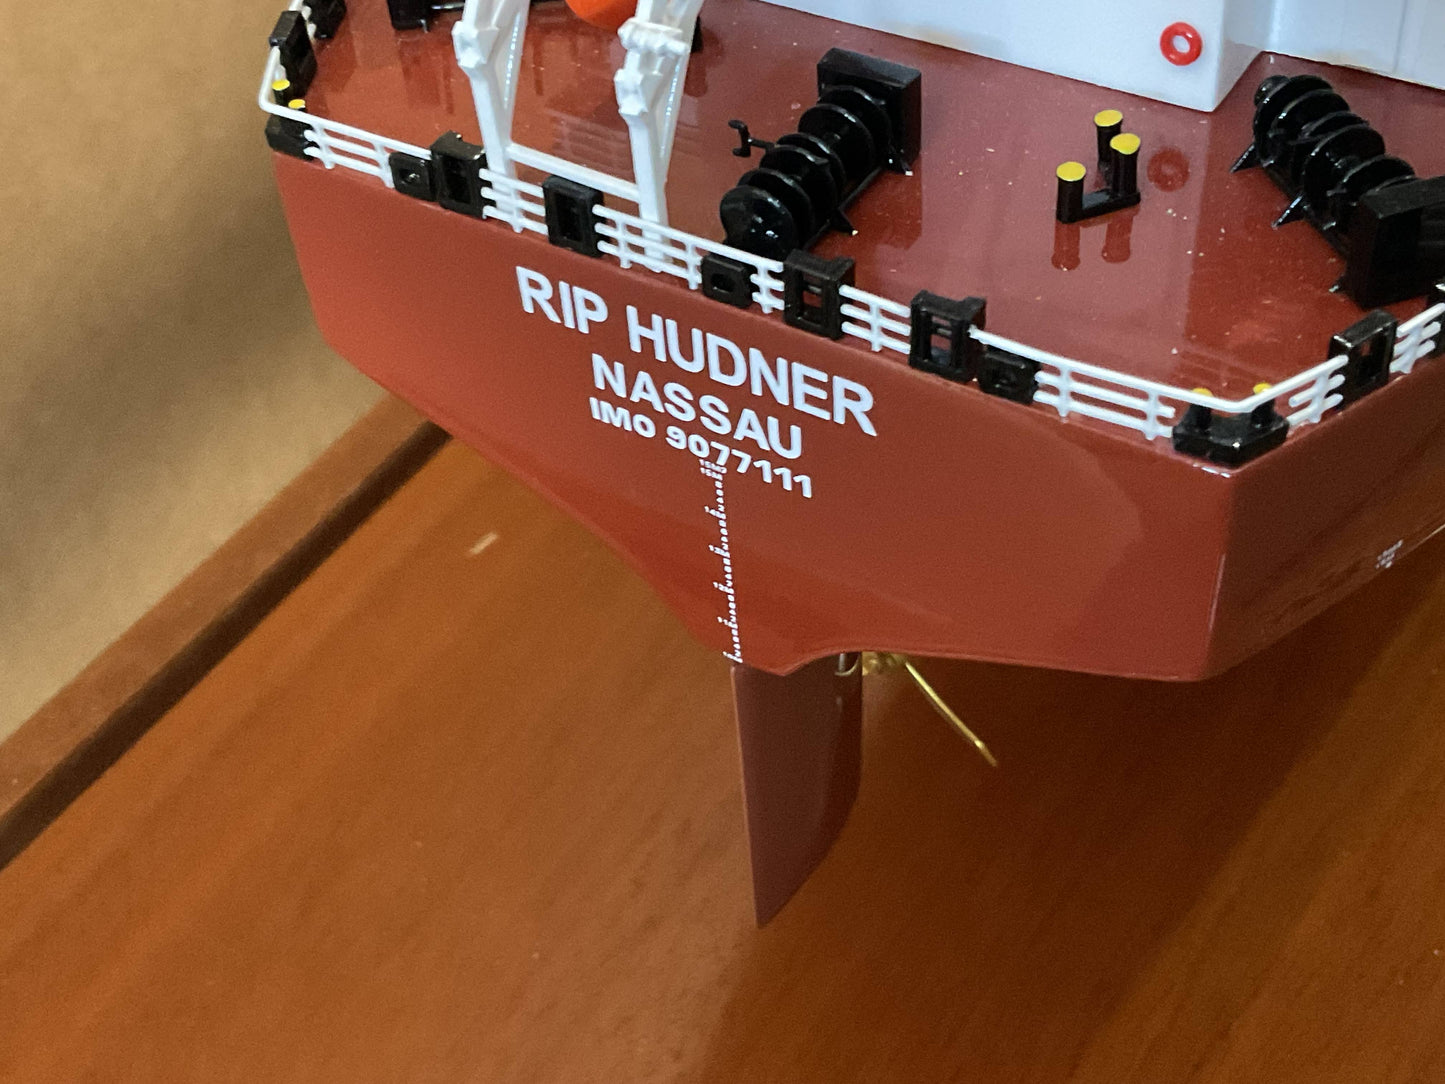 Builders Model of an Oil Tanker